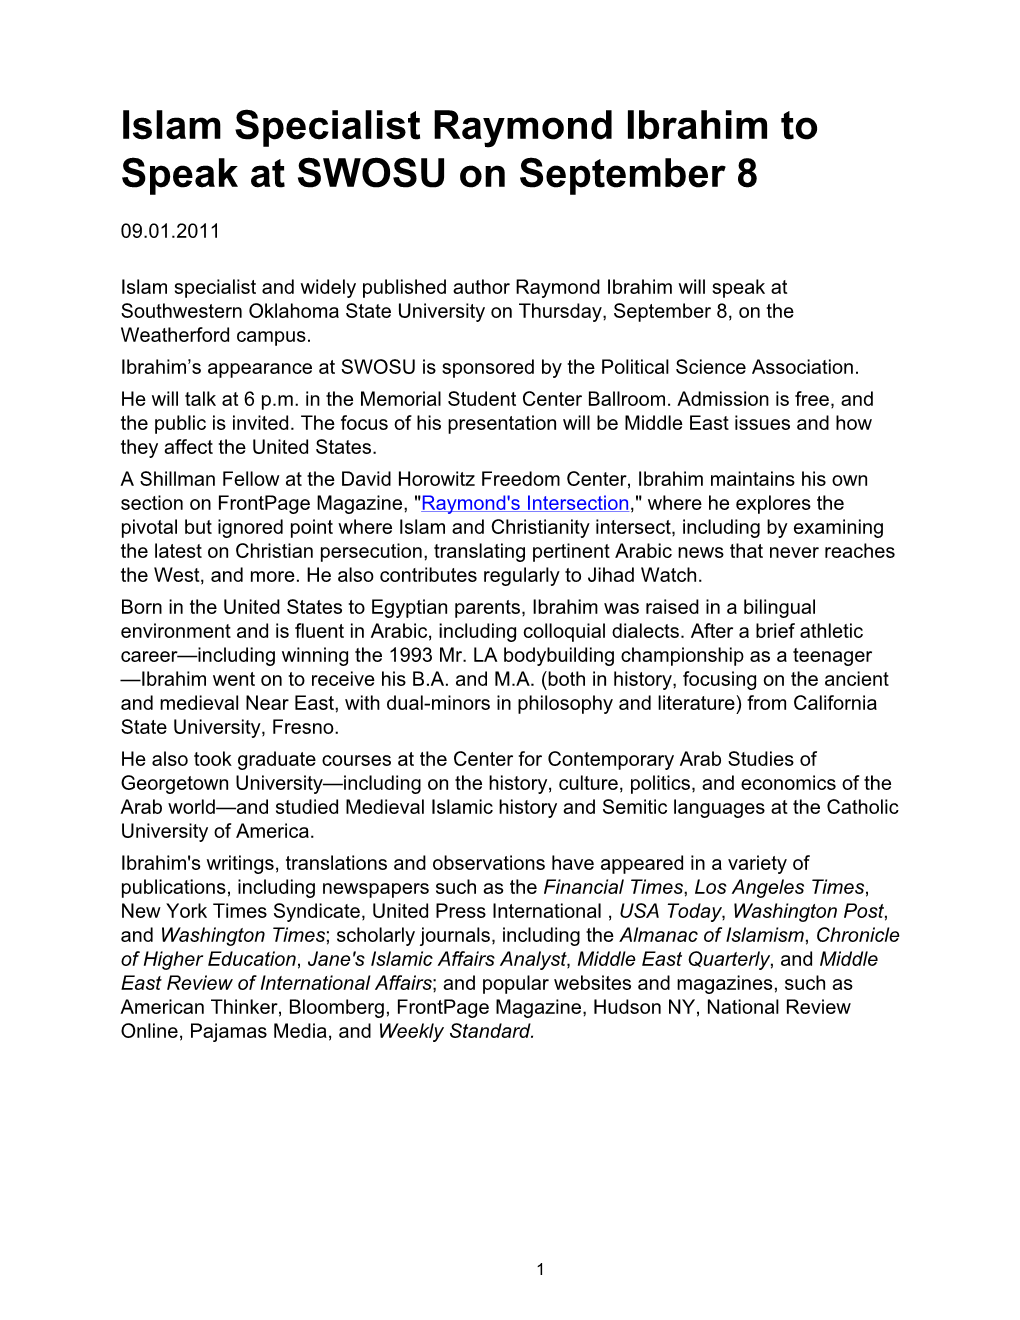 09-01-2011 Islam Specialist Raymond Ibrahim to Speak at SWOSU on September 8